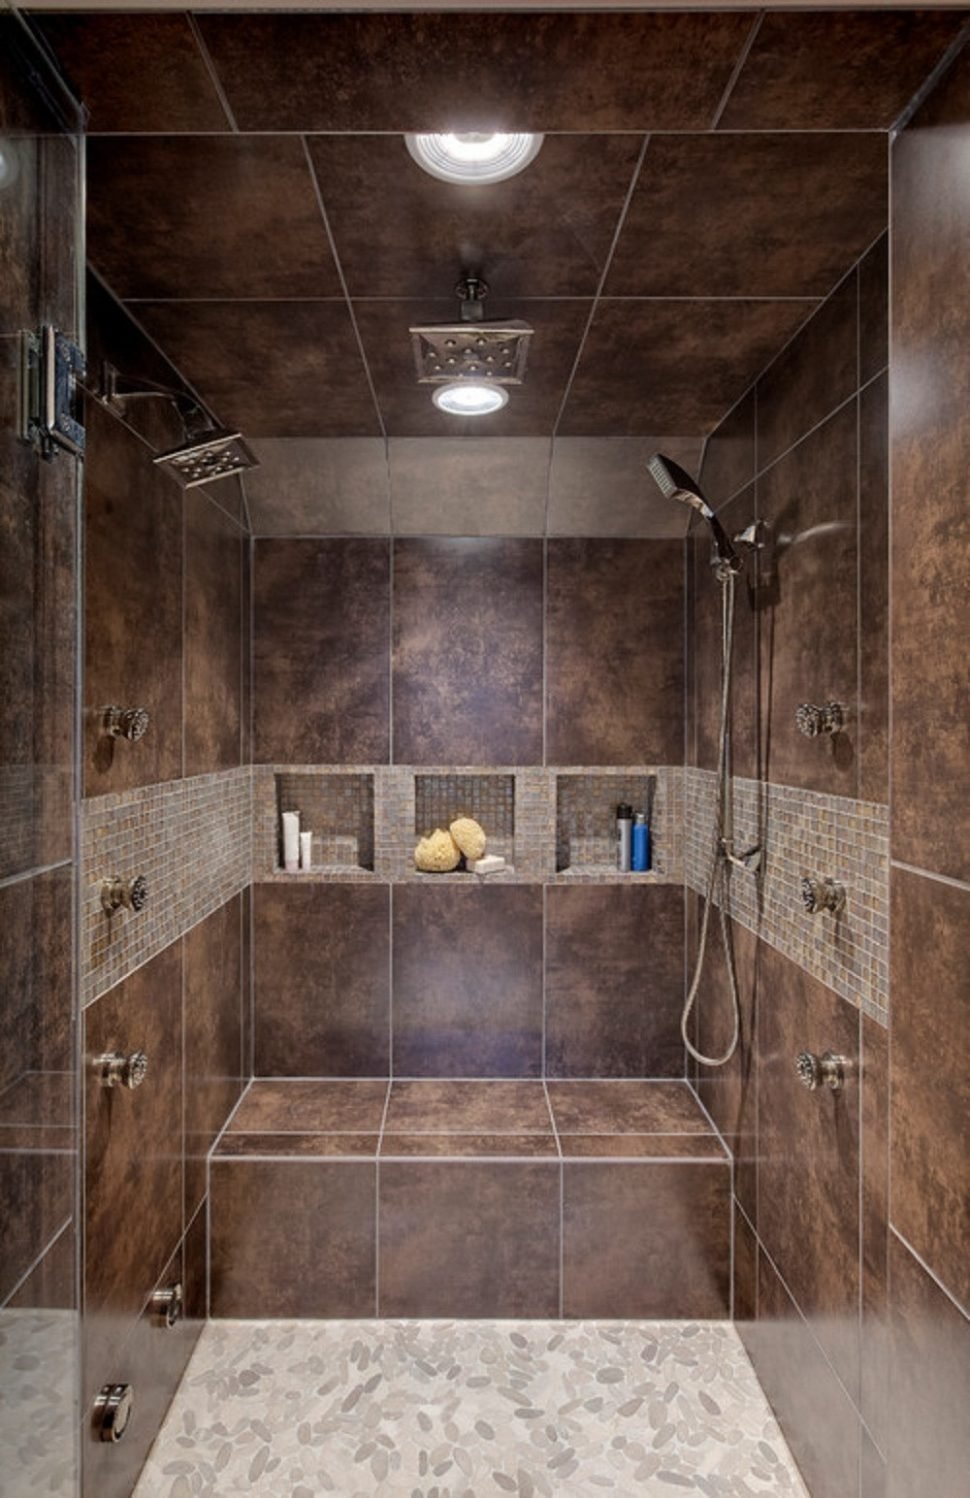 10 Wonderful Walk In Shower Tile Ideas sofa small walk in shower tile ideas bathroom design for photos 2022